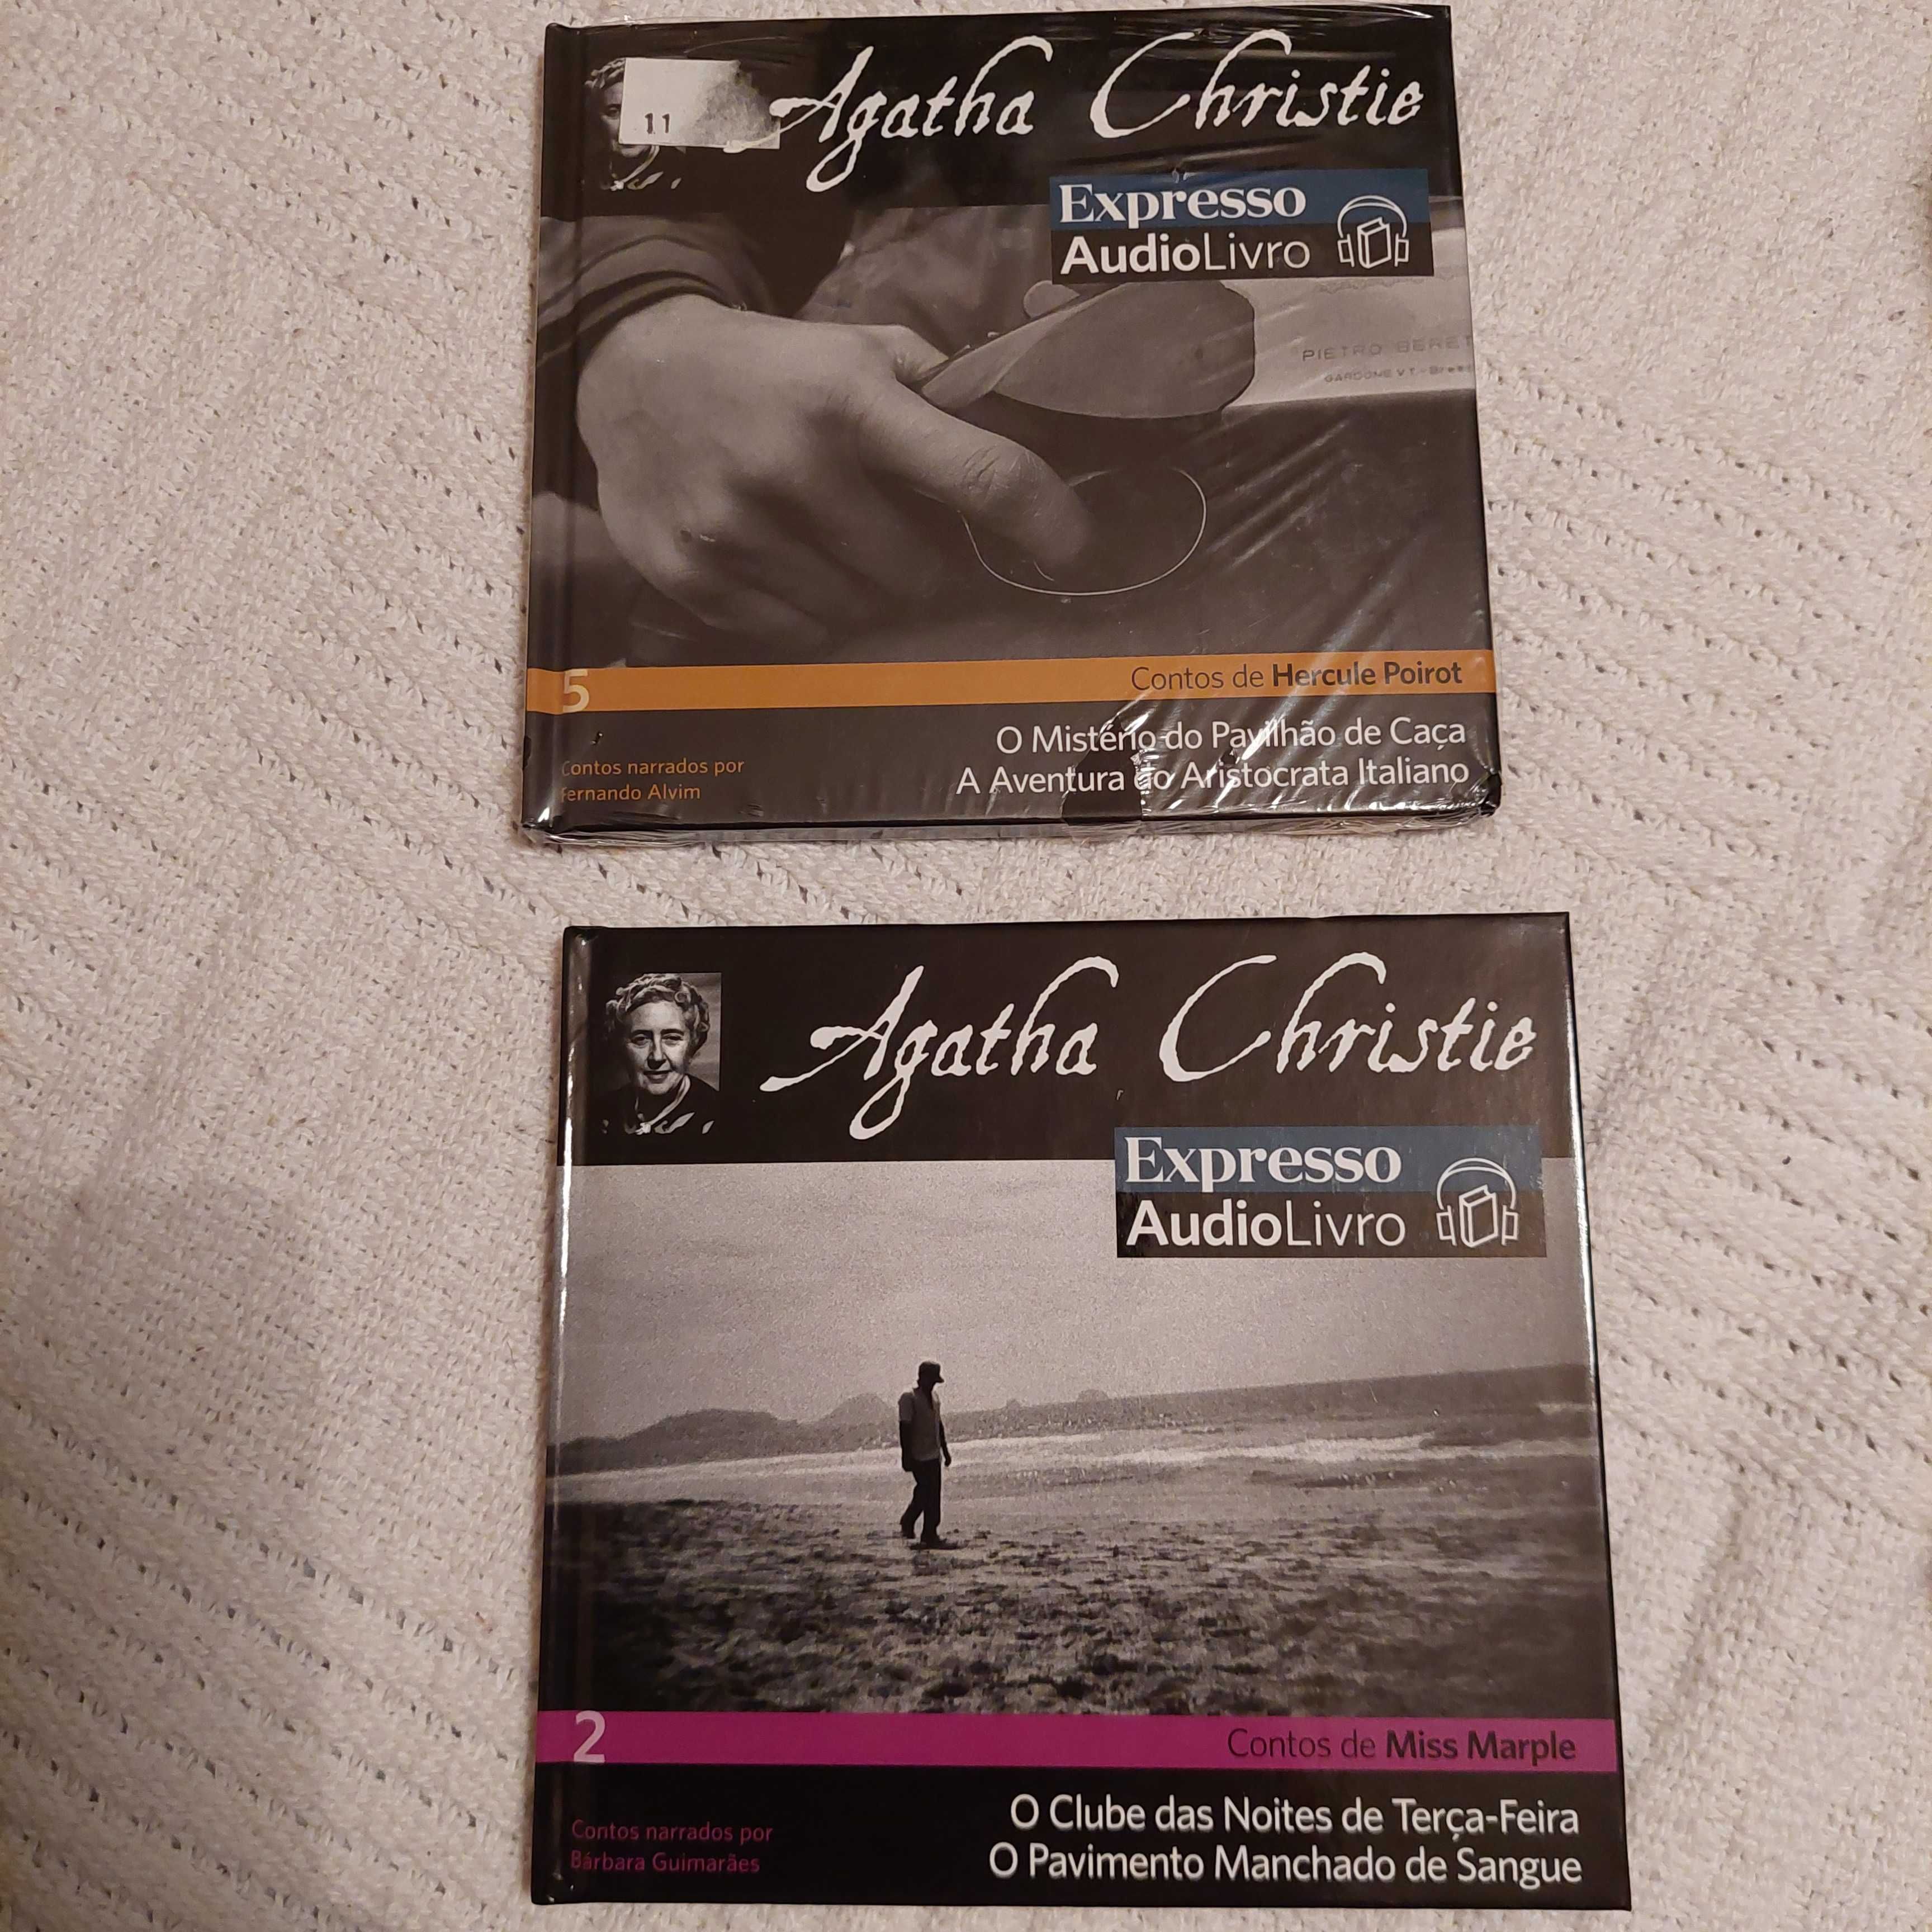 Audiolivro - Agatha Christie